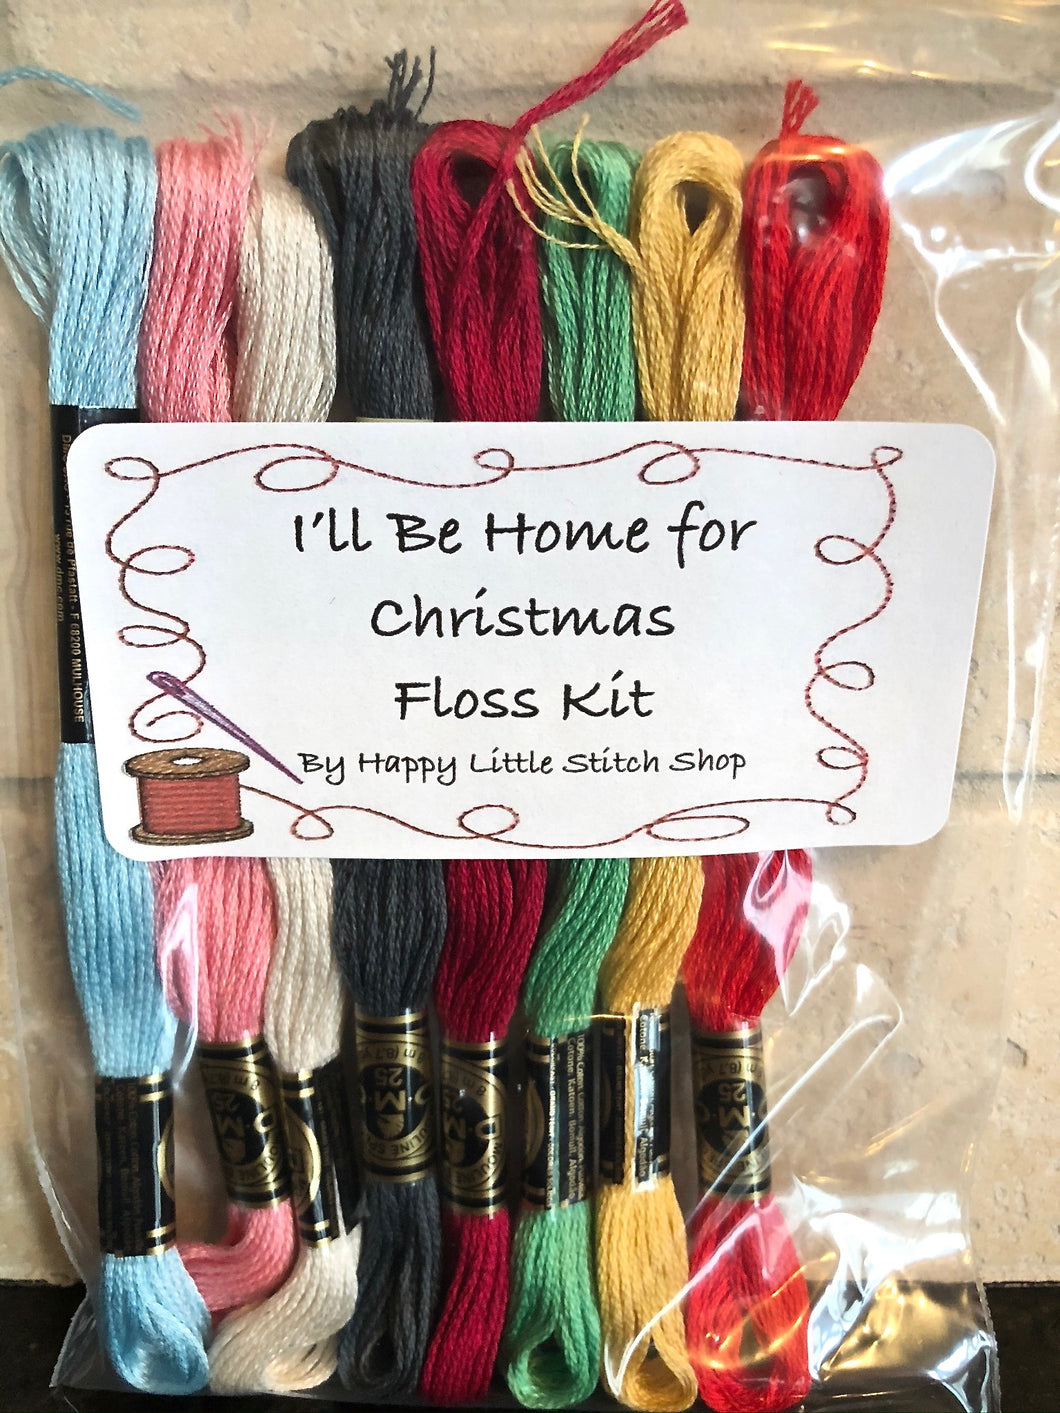 Floss Kit - I'll Be Home for Christmas